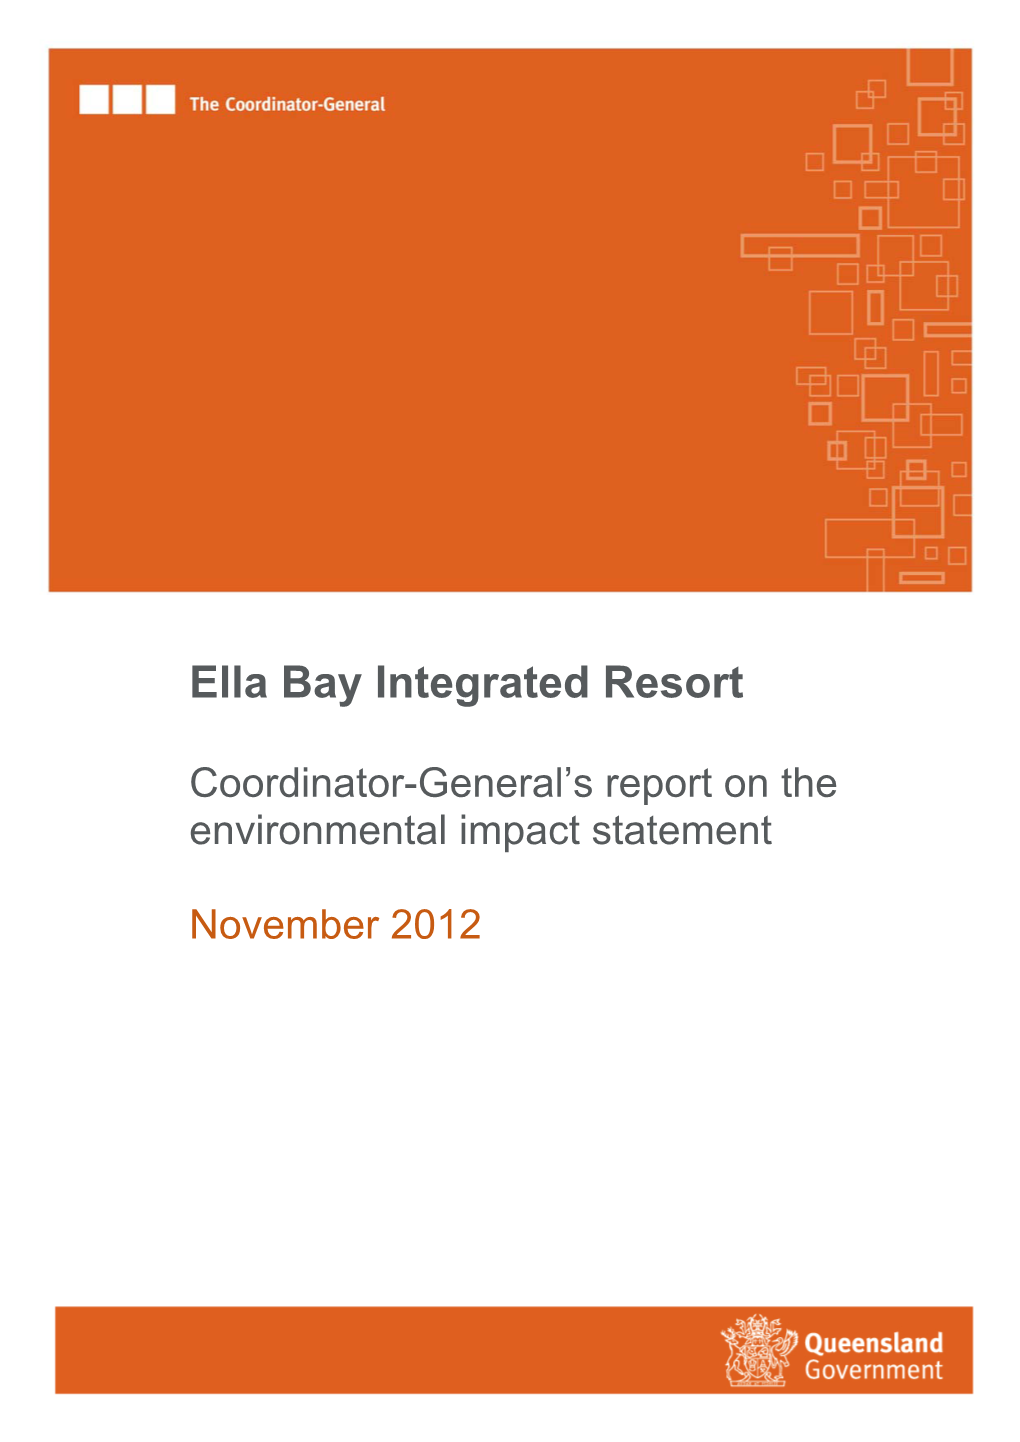 Ella Bay Integrated Resort Coordinator-General's Report on The